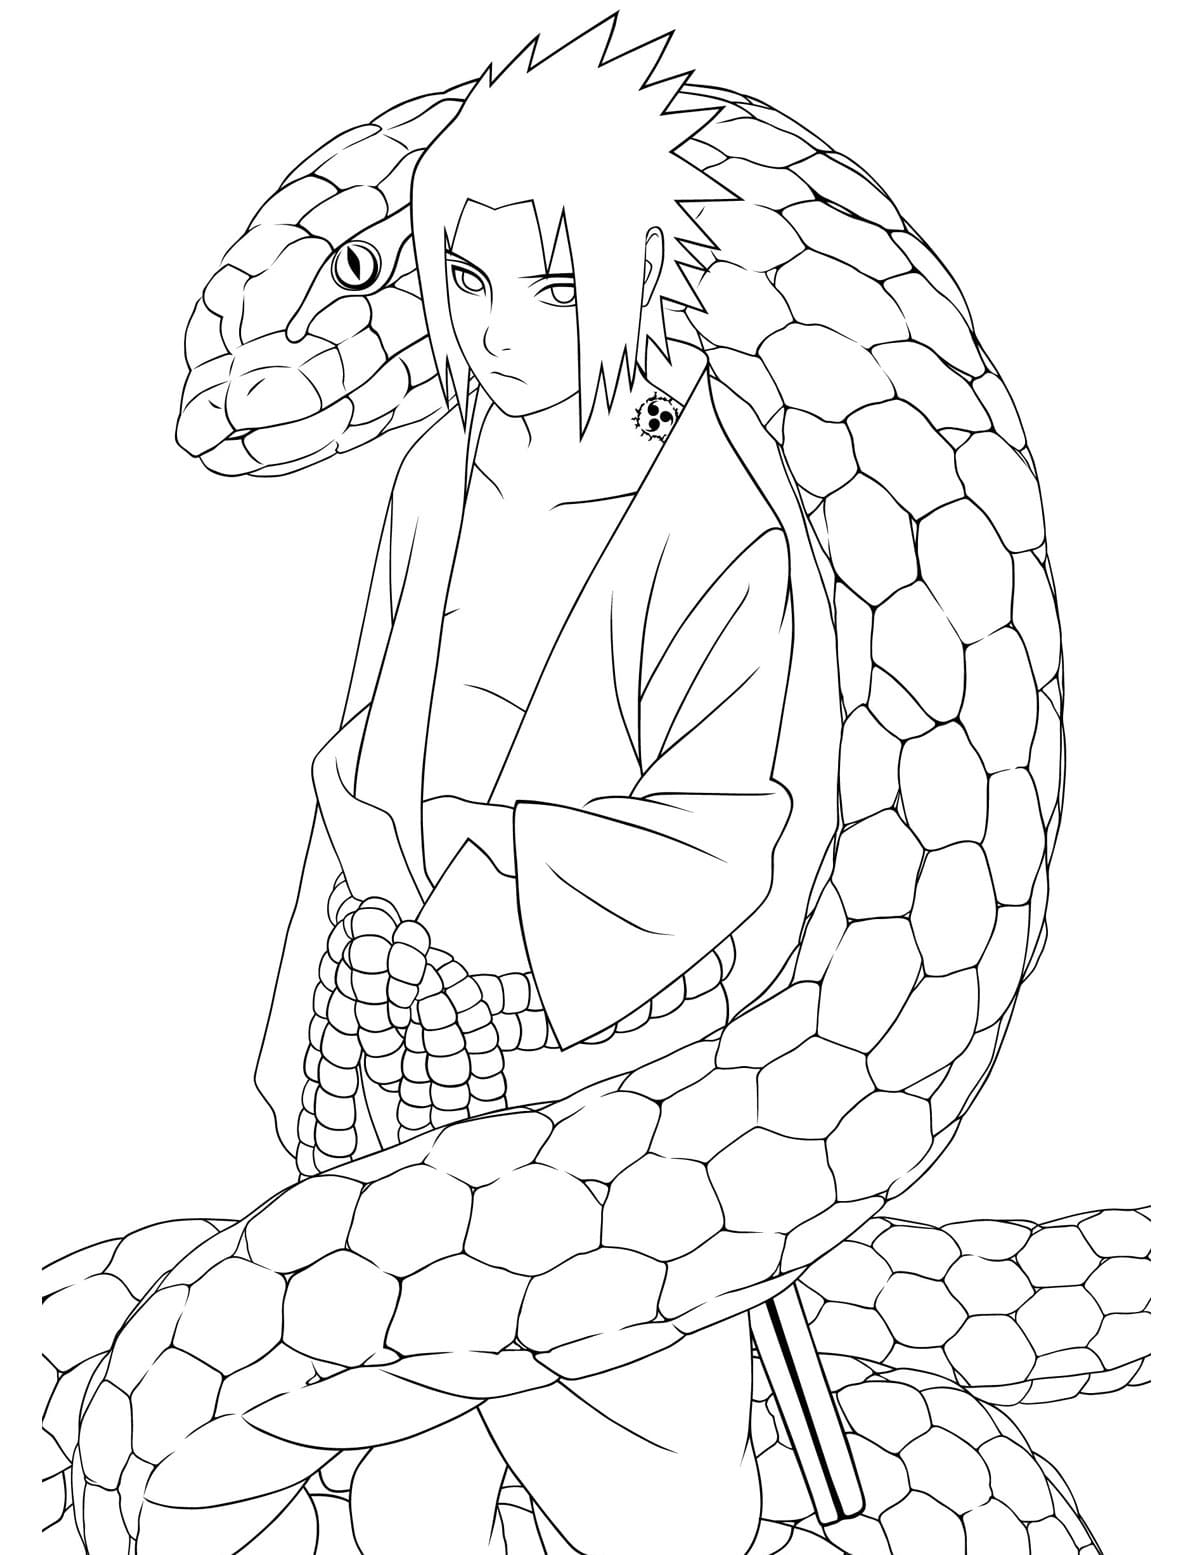 Sasuke Uchiha, um ninja de Naruto para colorir e imprimir